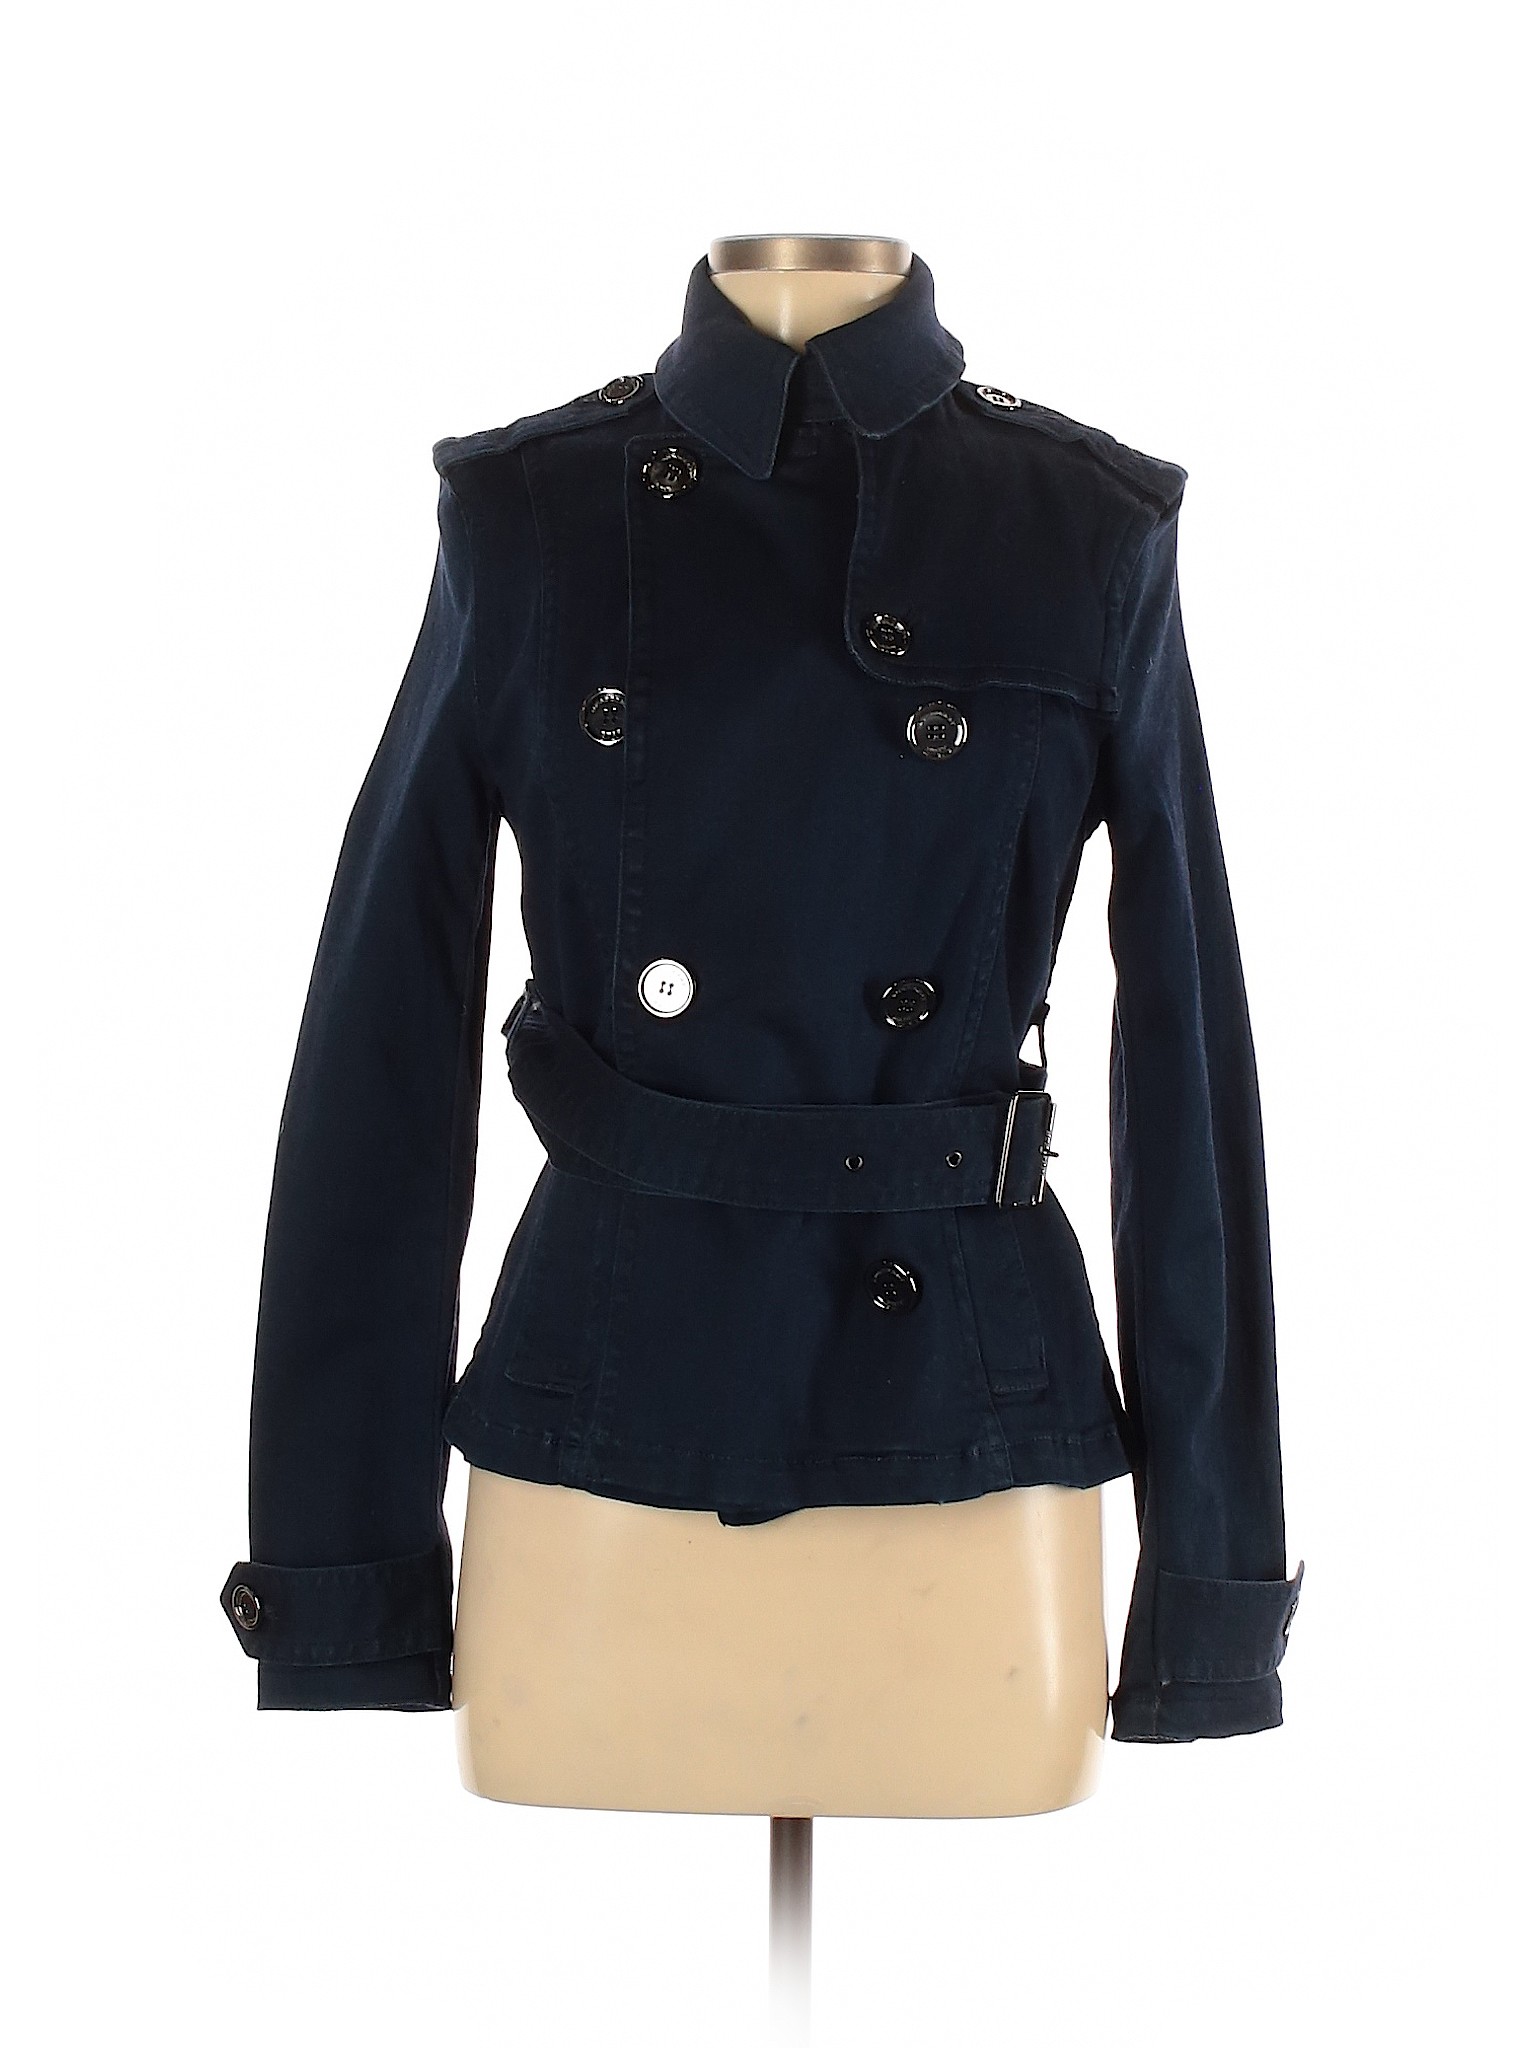 Burberry Brit Women Blue Denim Jacket 8 | eBay